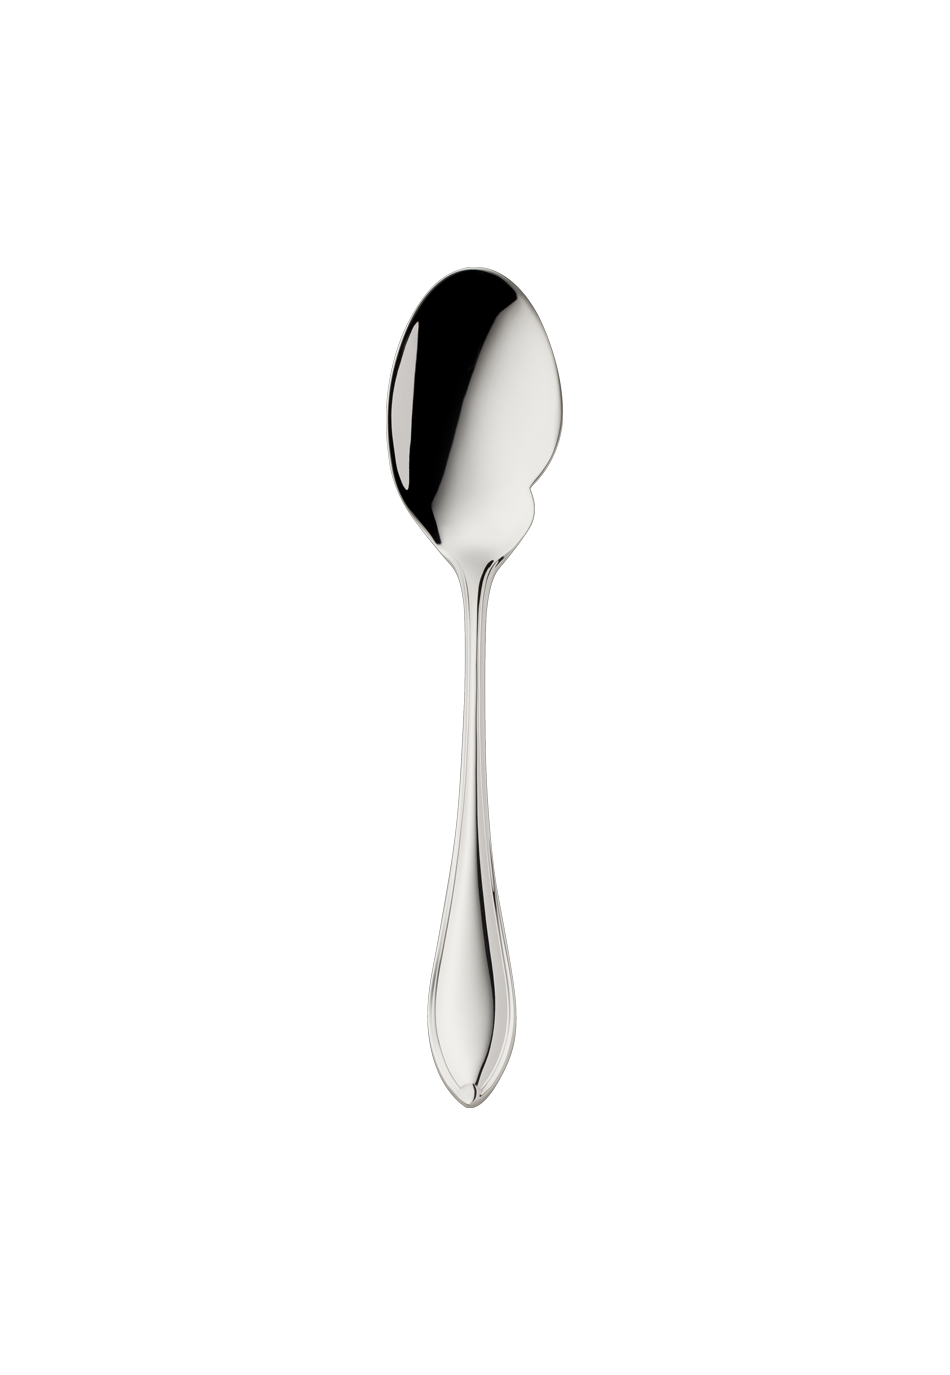 Navette Gourmet spoon (150g massive silverplated)